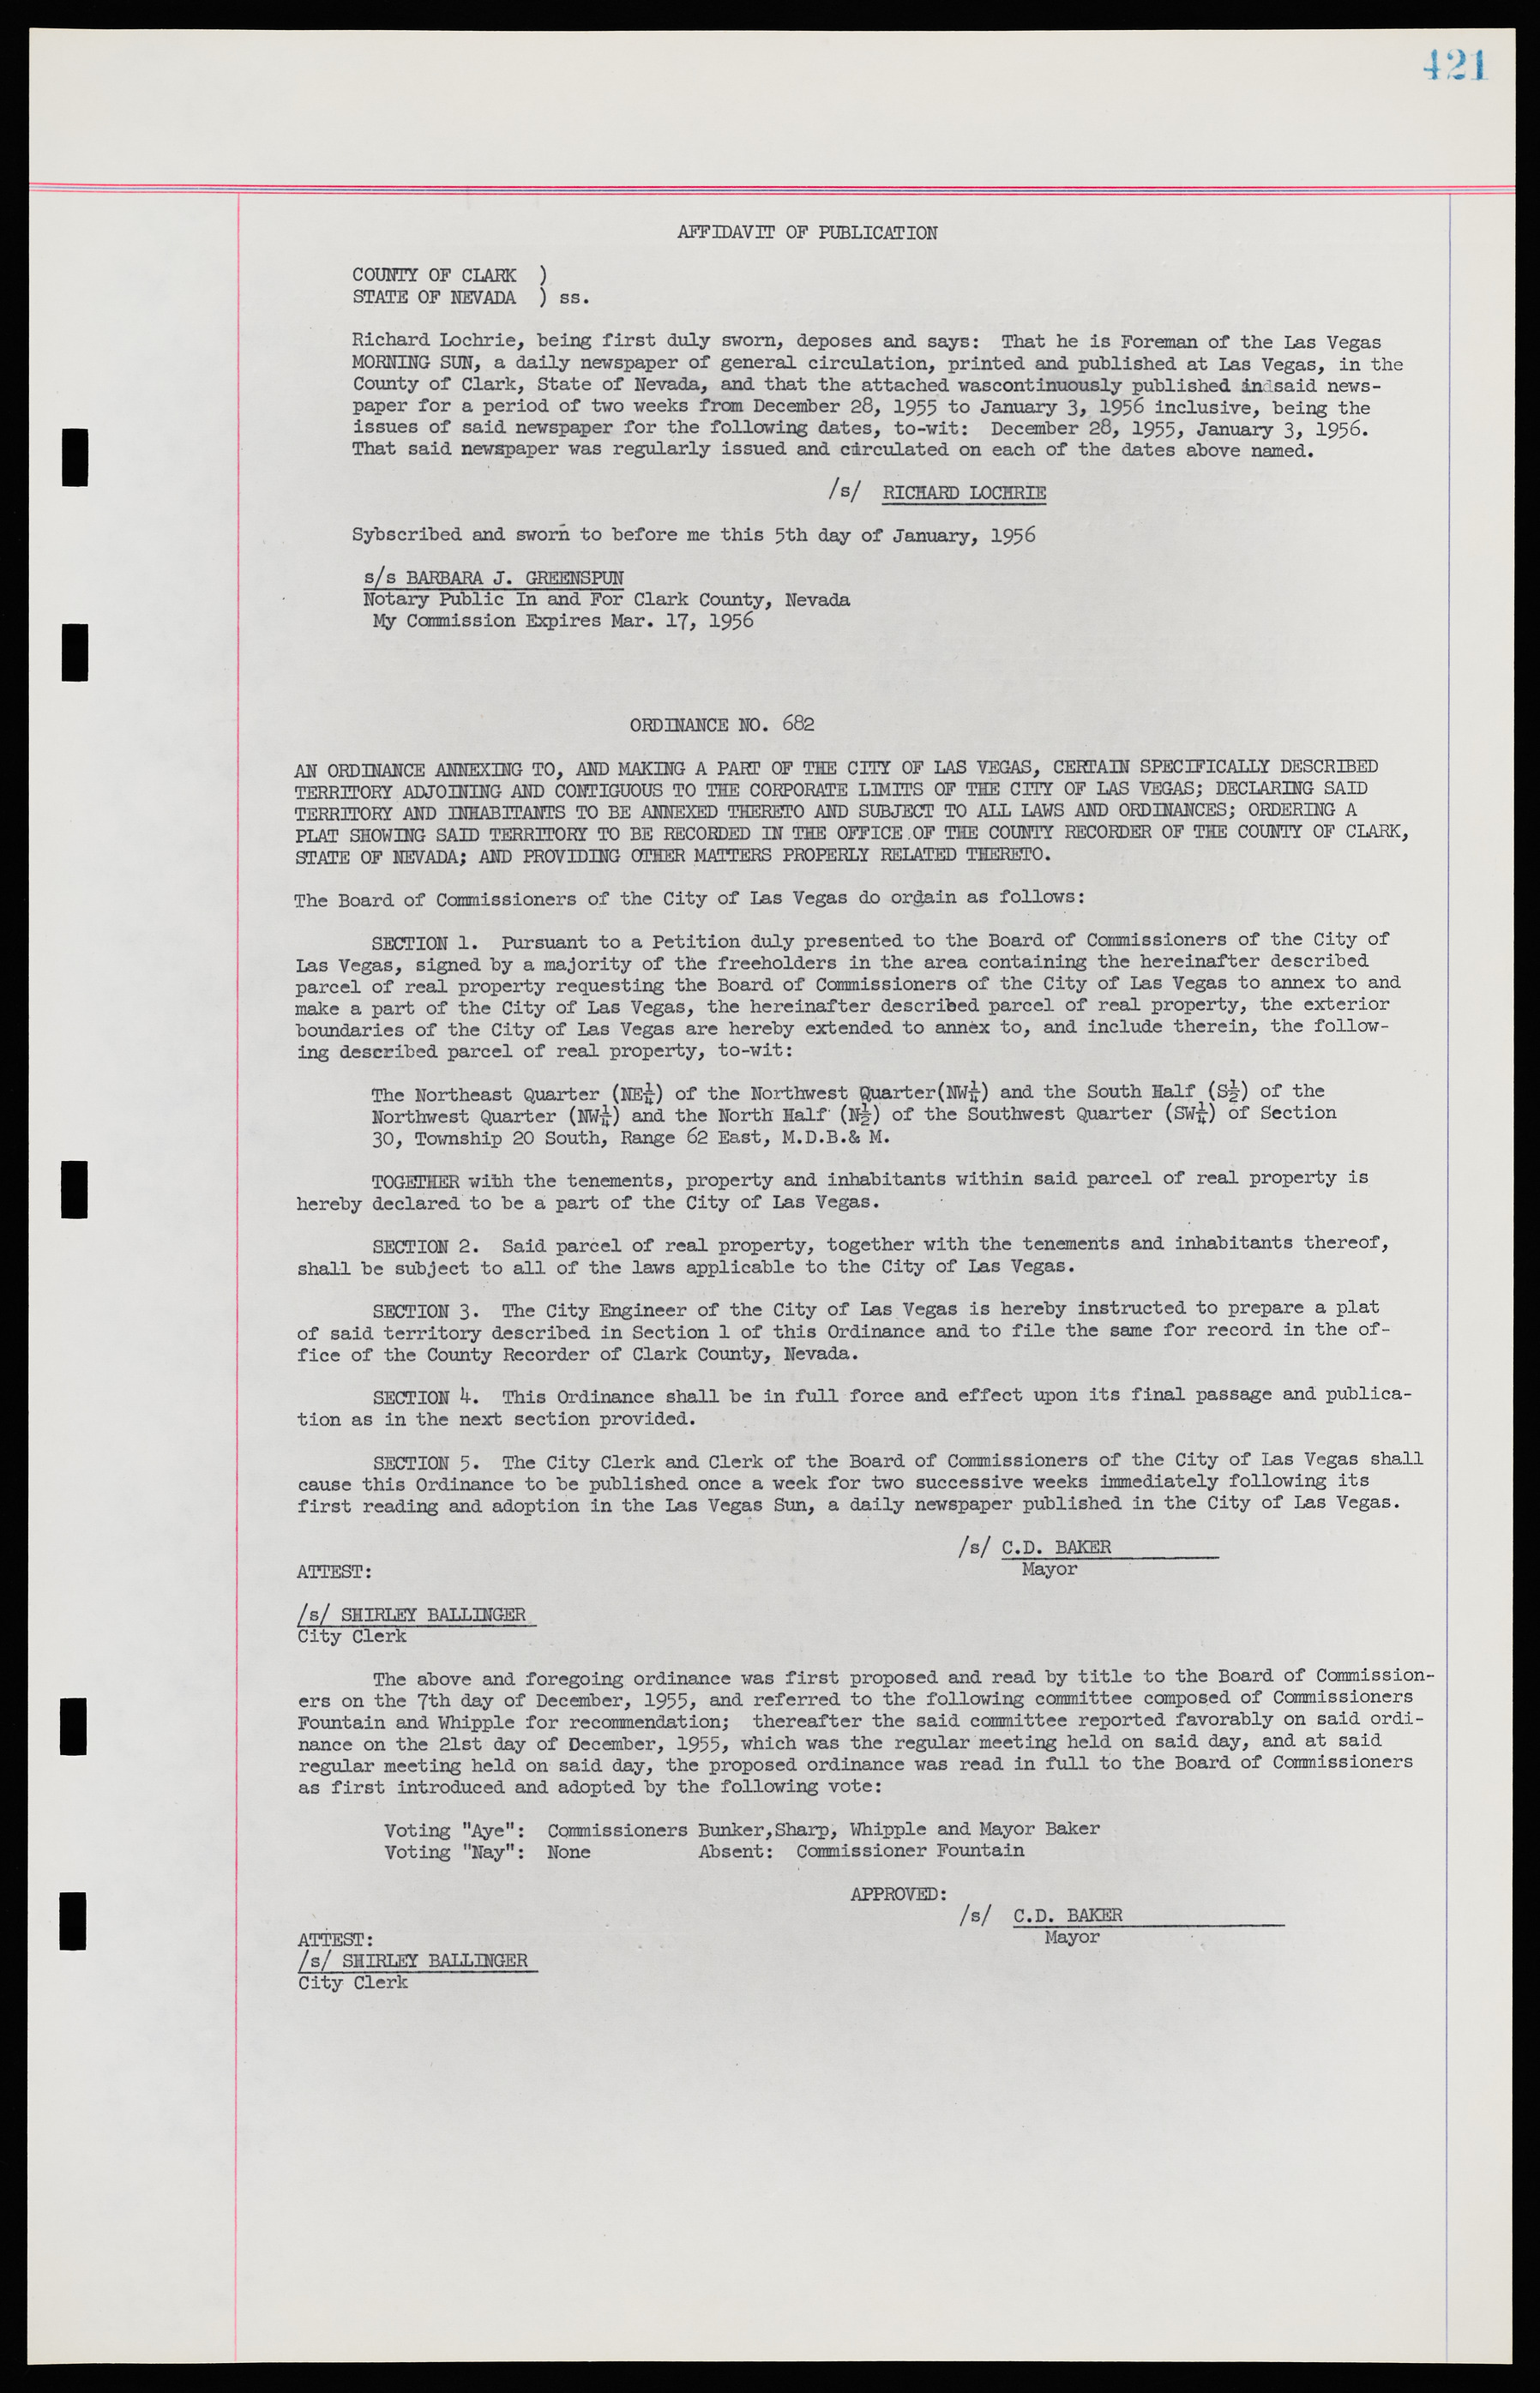 Las Vegas City Ordinances, November 13, 1950 to August 6, 1958, lvc000015-429